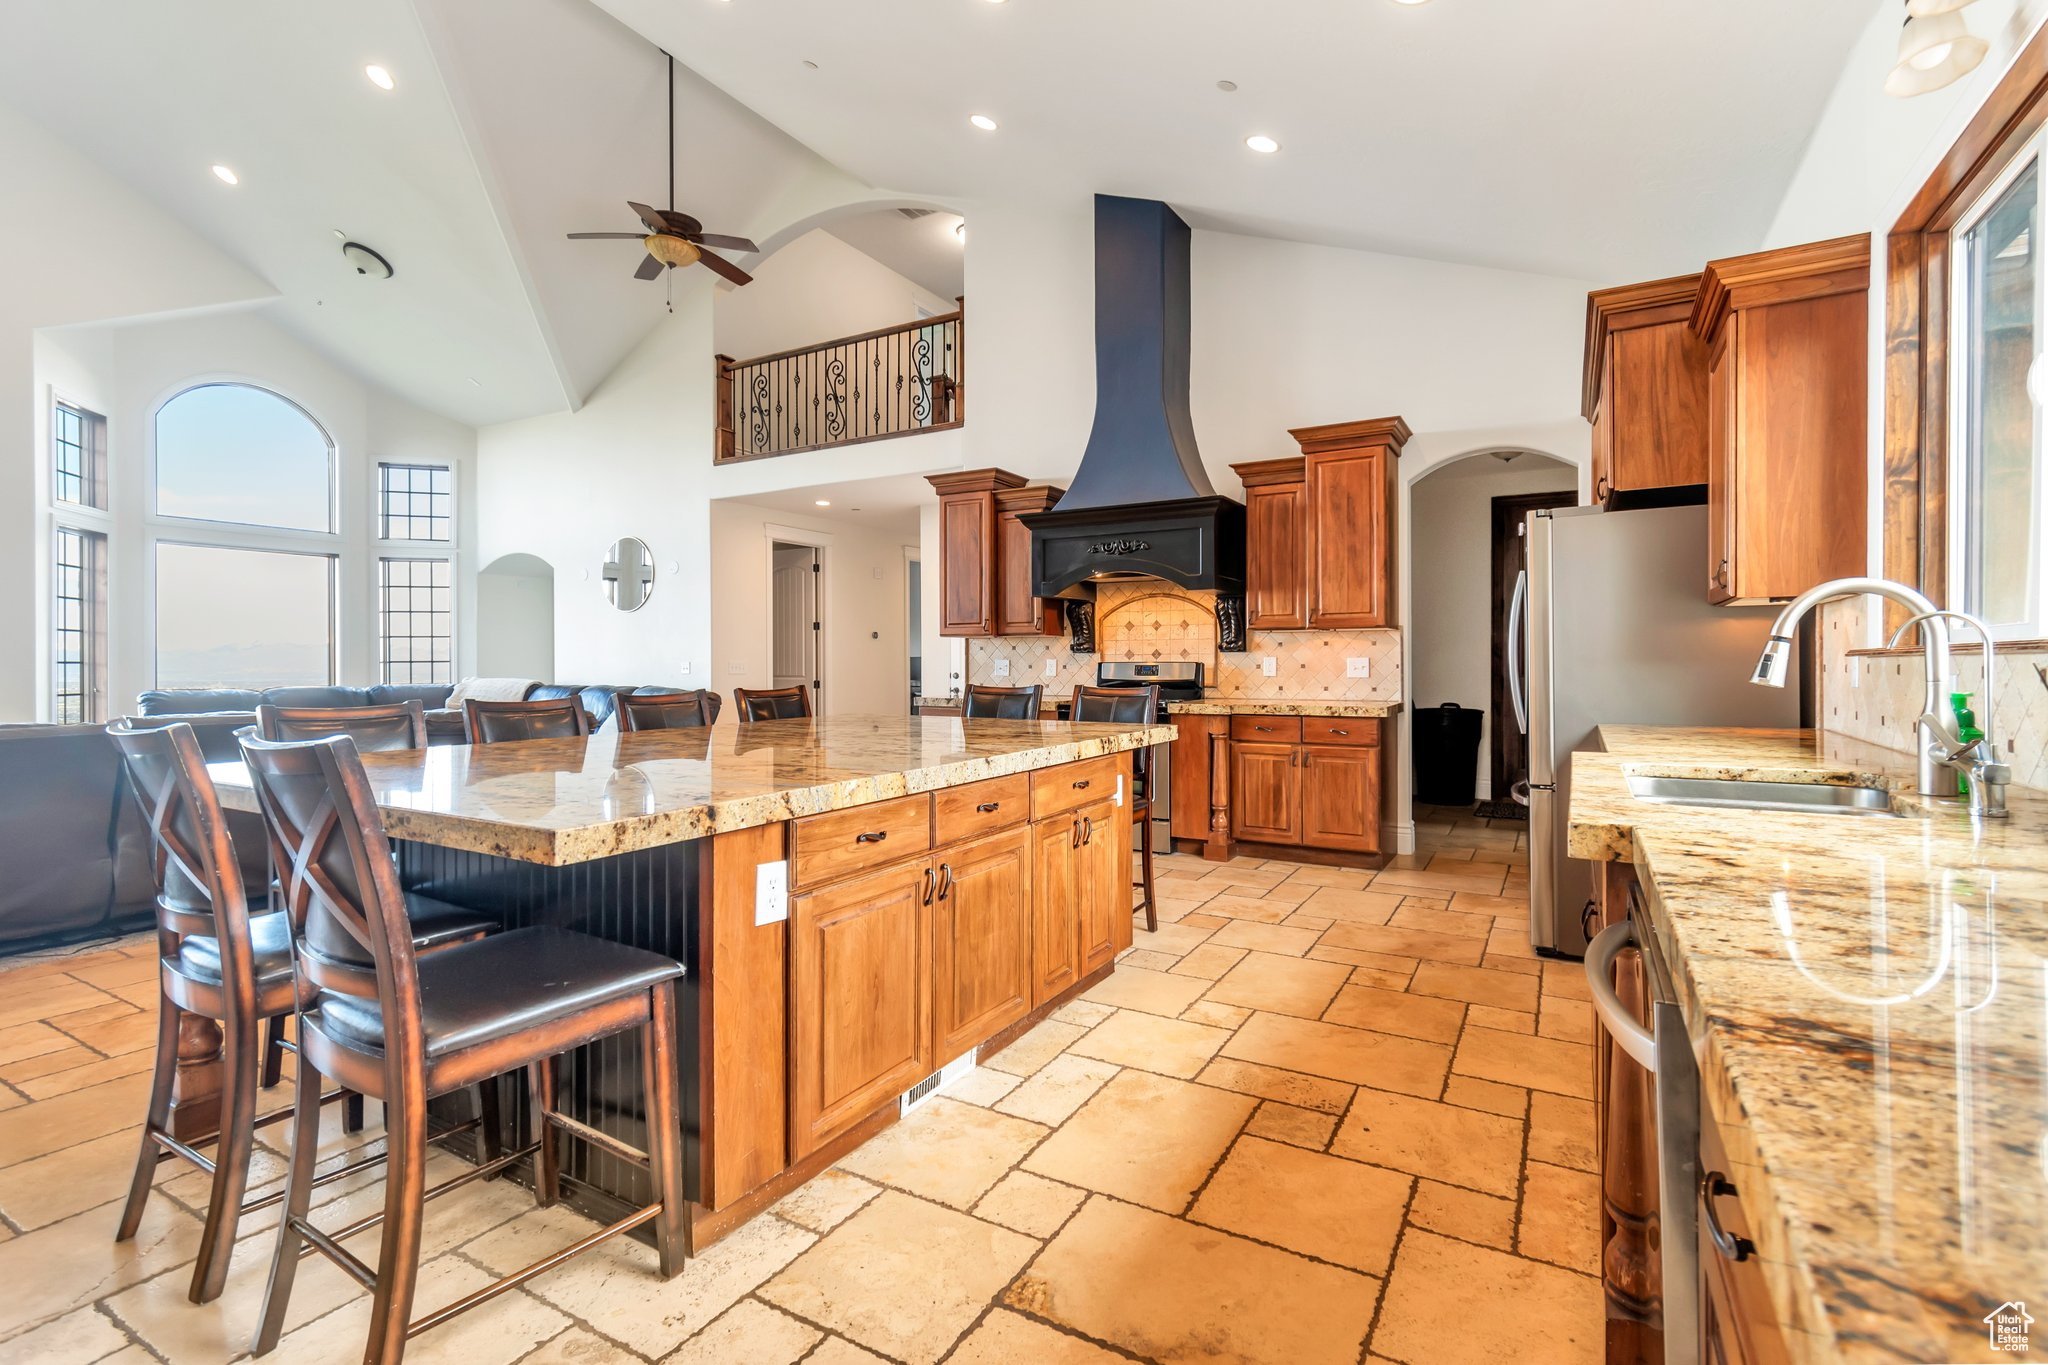 Kitchen featuring a center island, tasteful backsplash, premium range hood, and high vaulted ceiling